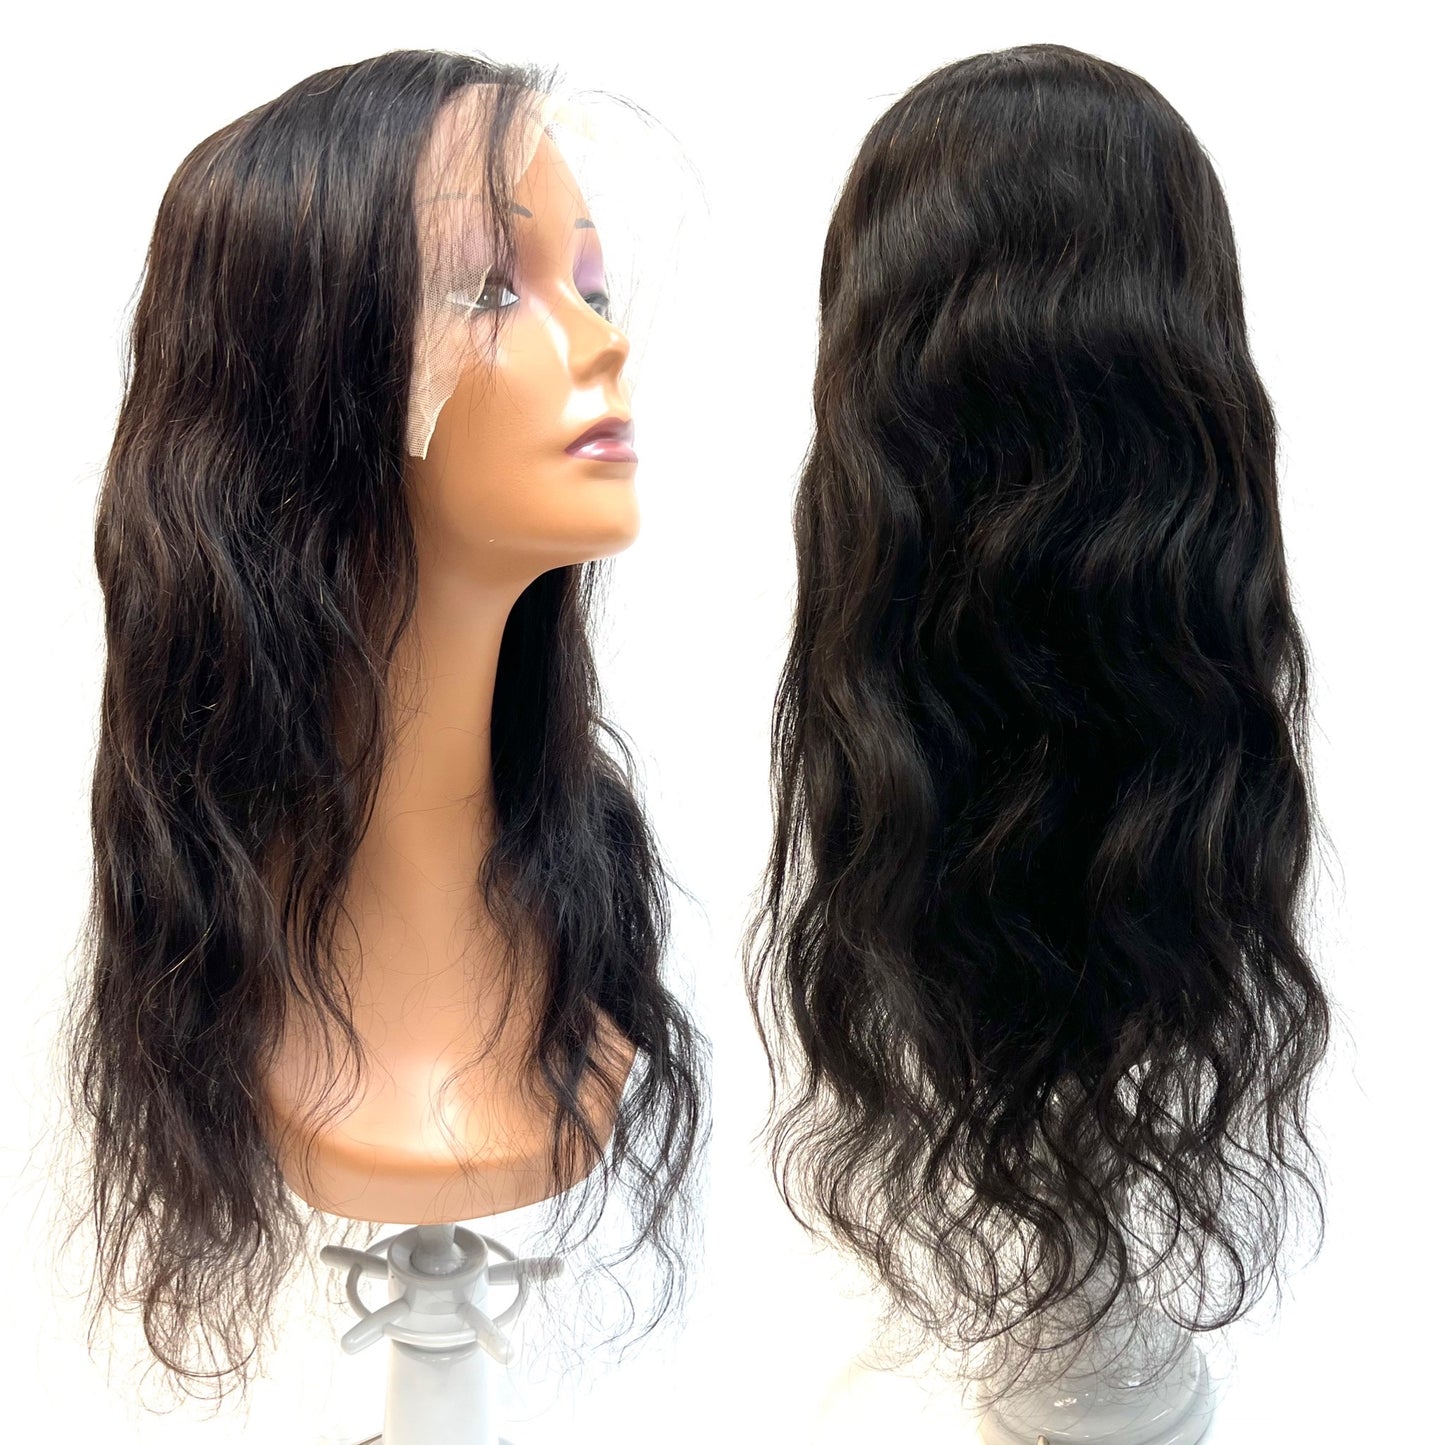 RIO Body Wave Human Hair Front Lace Wig - Natural Black